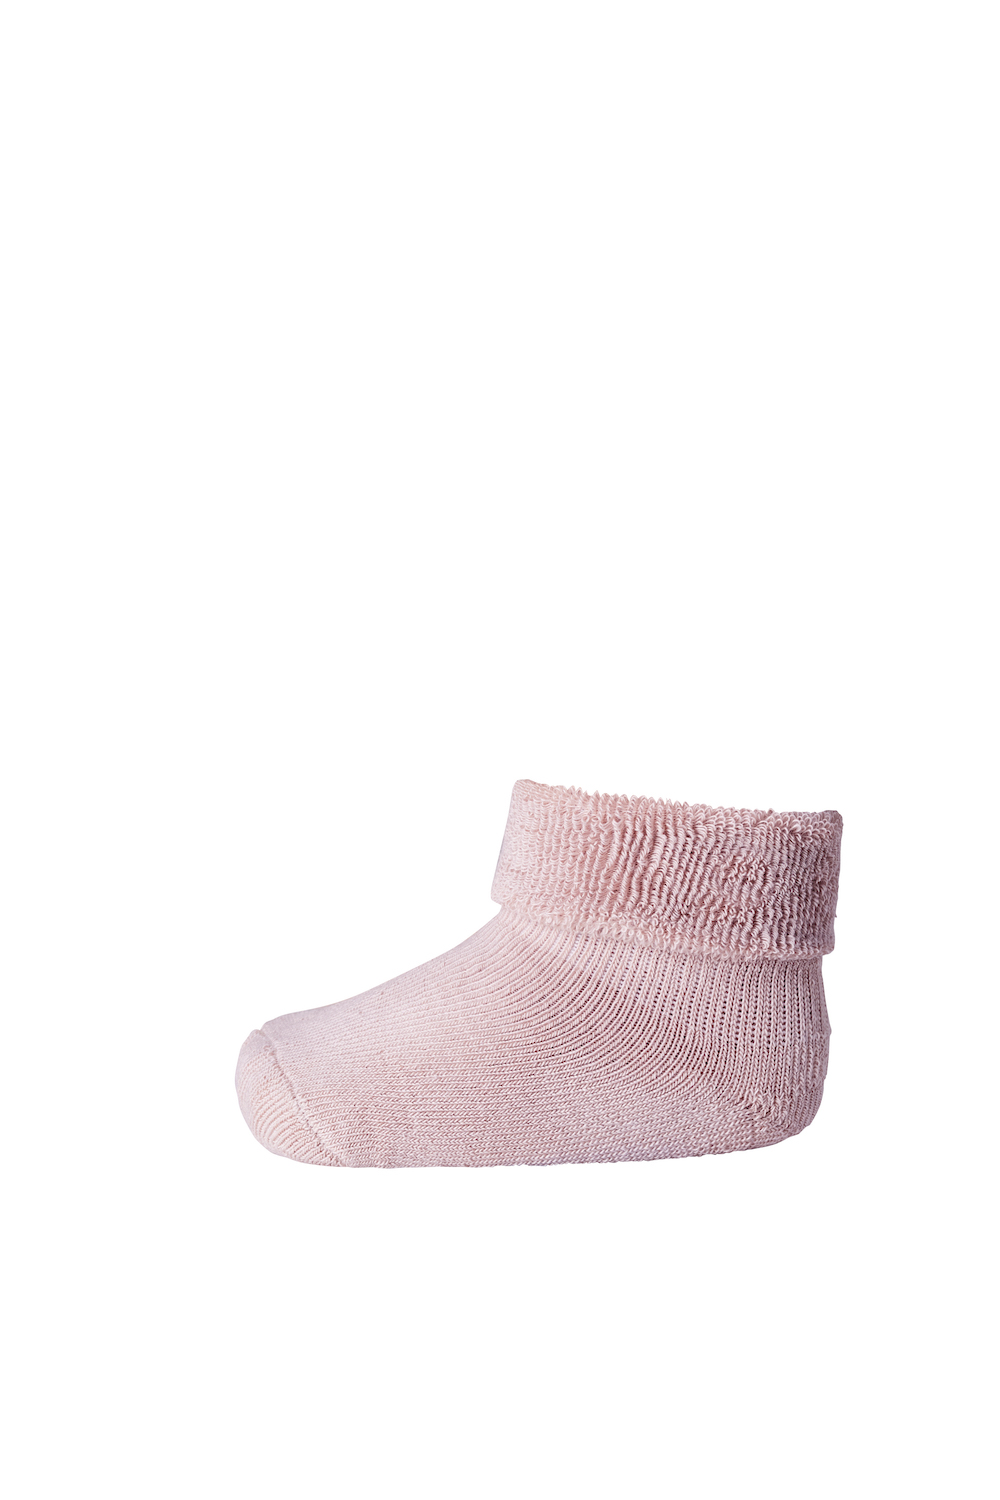 Verstikken Teken bevroren MP Denmark babysokjes rose grey roze badstof - Minipop